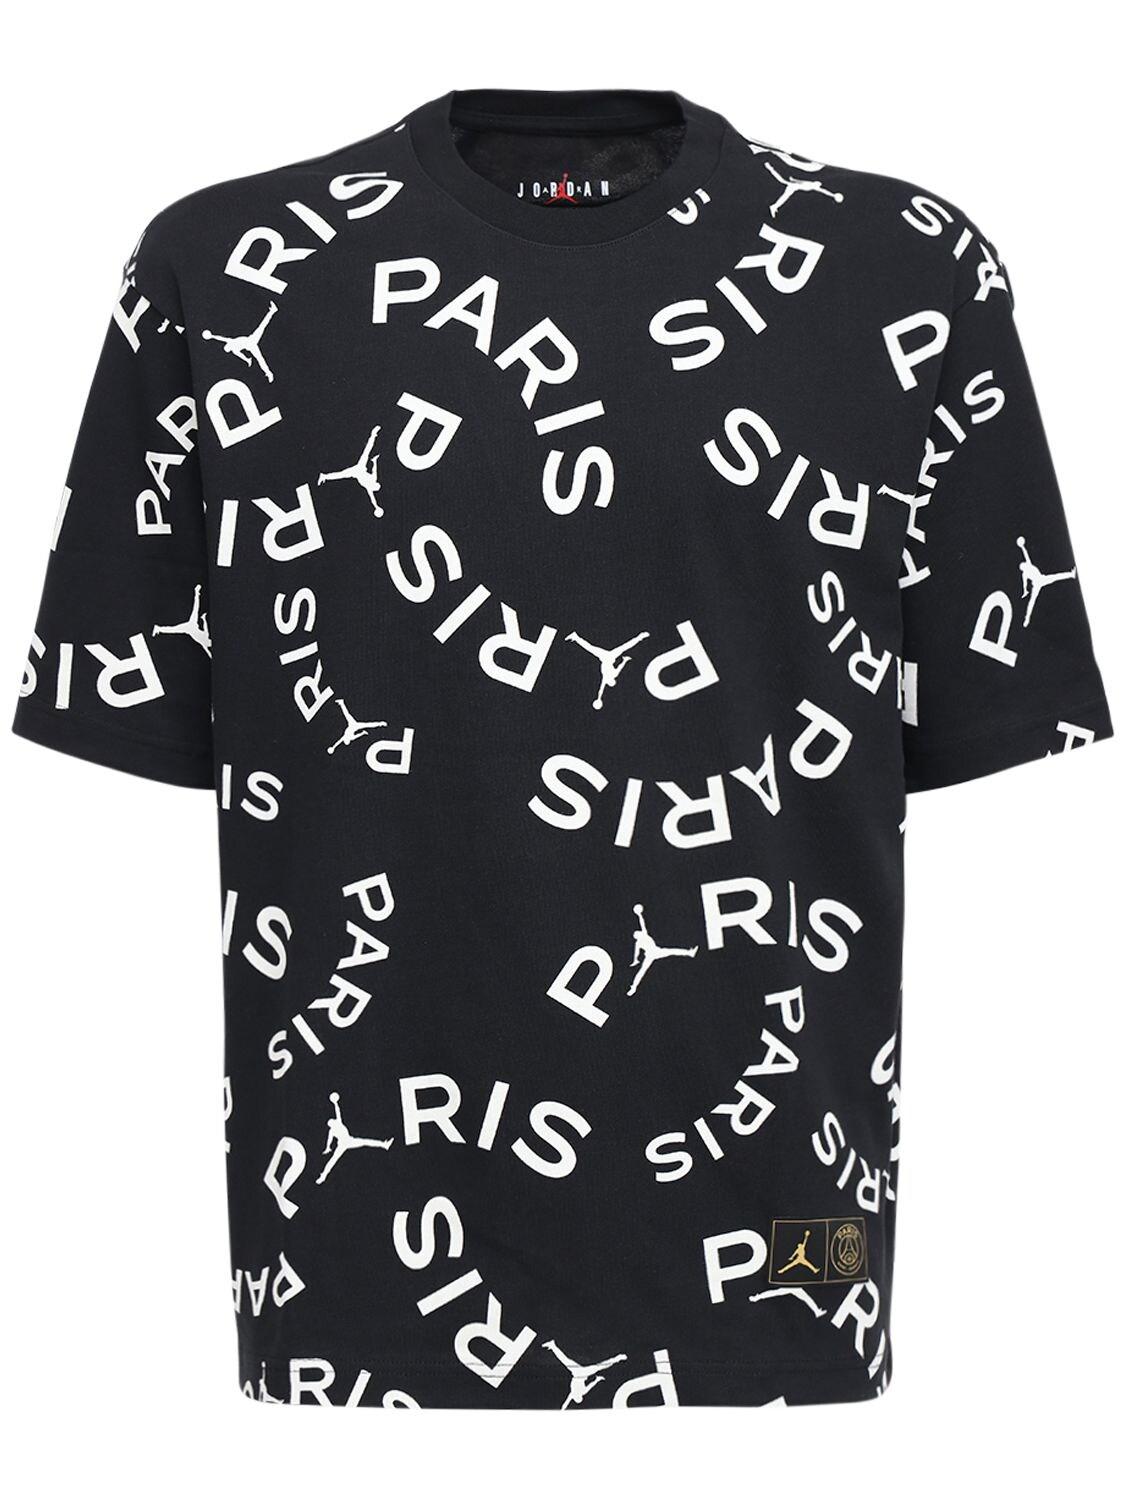 Nike Jordan Psg Jock Tag Cotton T-shirt in Black for Men - Lyst